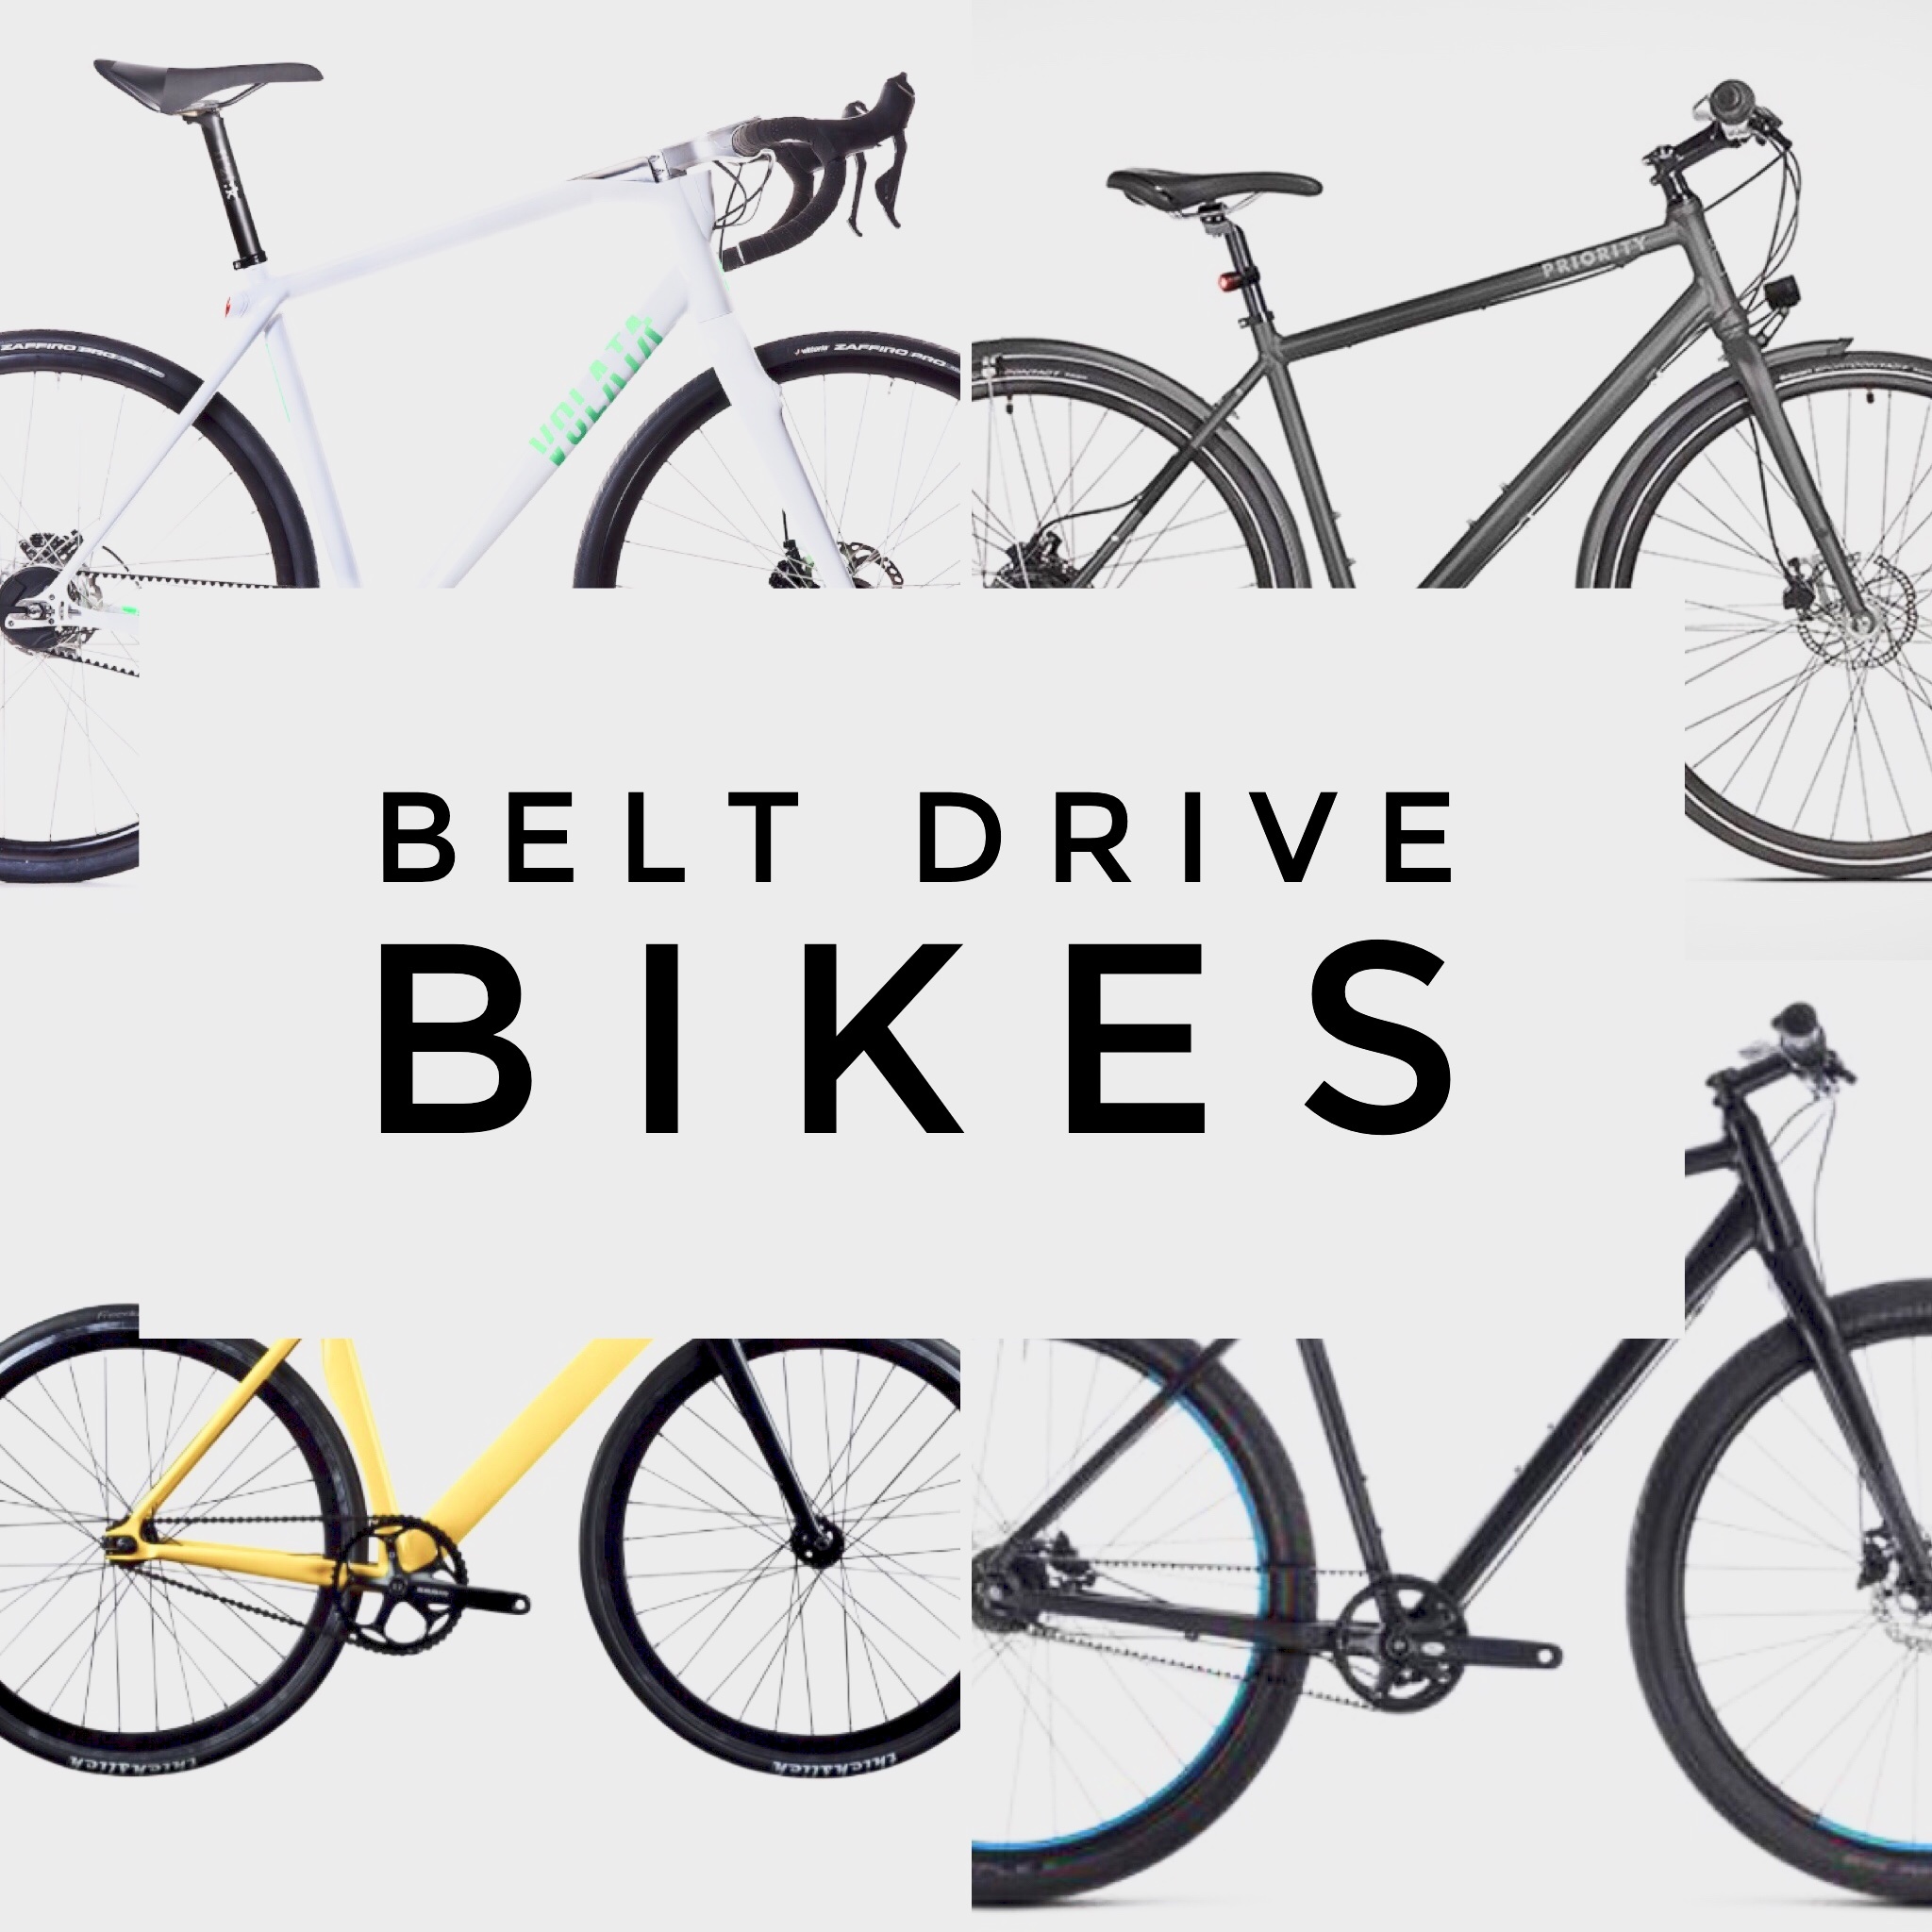 belt drive bikes 2019